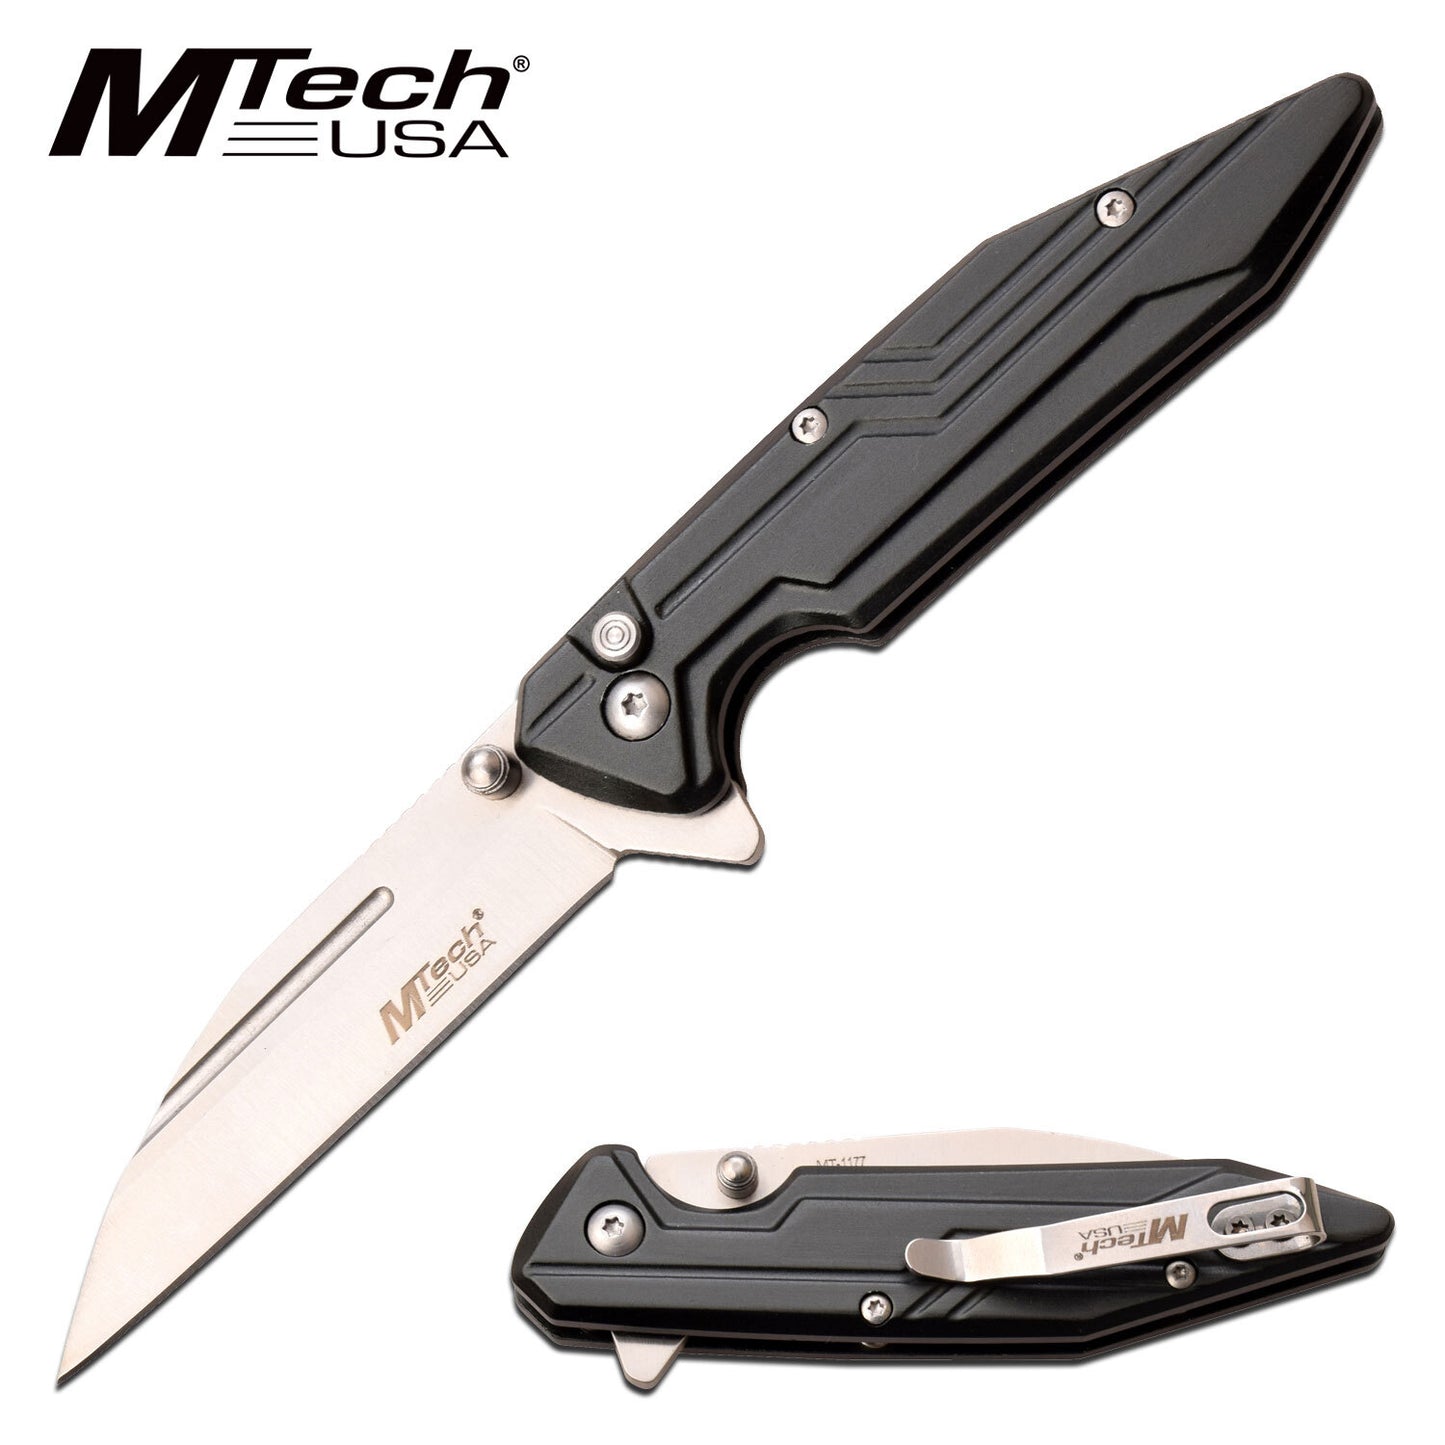 Mtech Mtech 7 Inch Hunting Manual Folding Knife W Pocket Clip - Black #mt-1177Bk Dim Gray